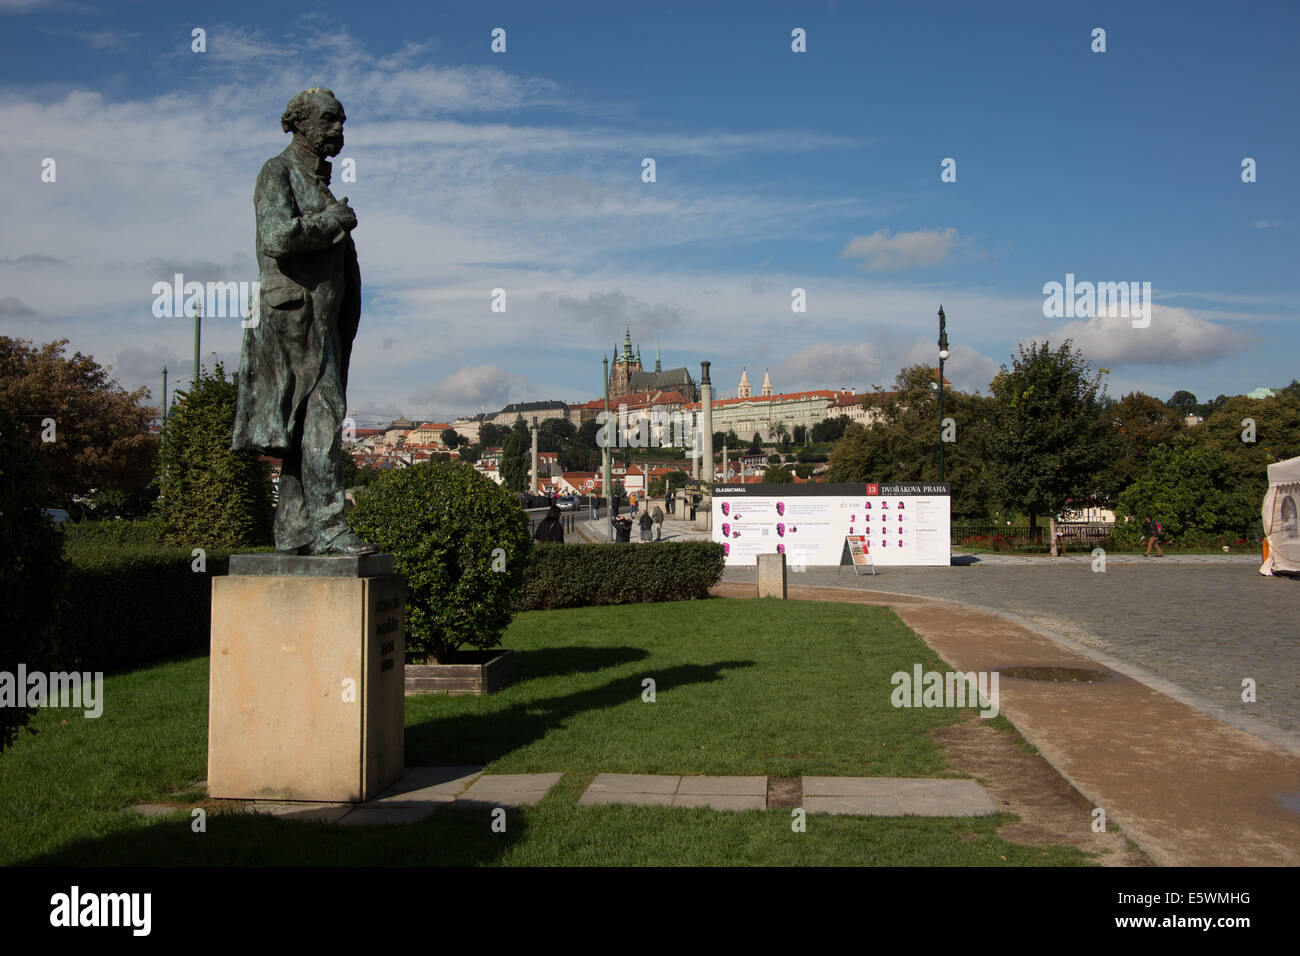 Statue of Dvorak in front of the Rudolfinium on Jan Palach Square, Prague, Czech republic Stock Photo